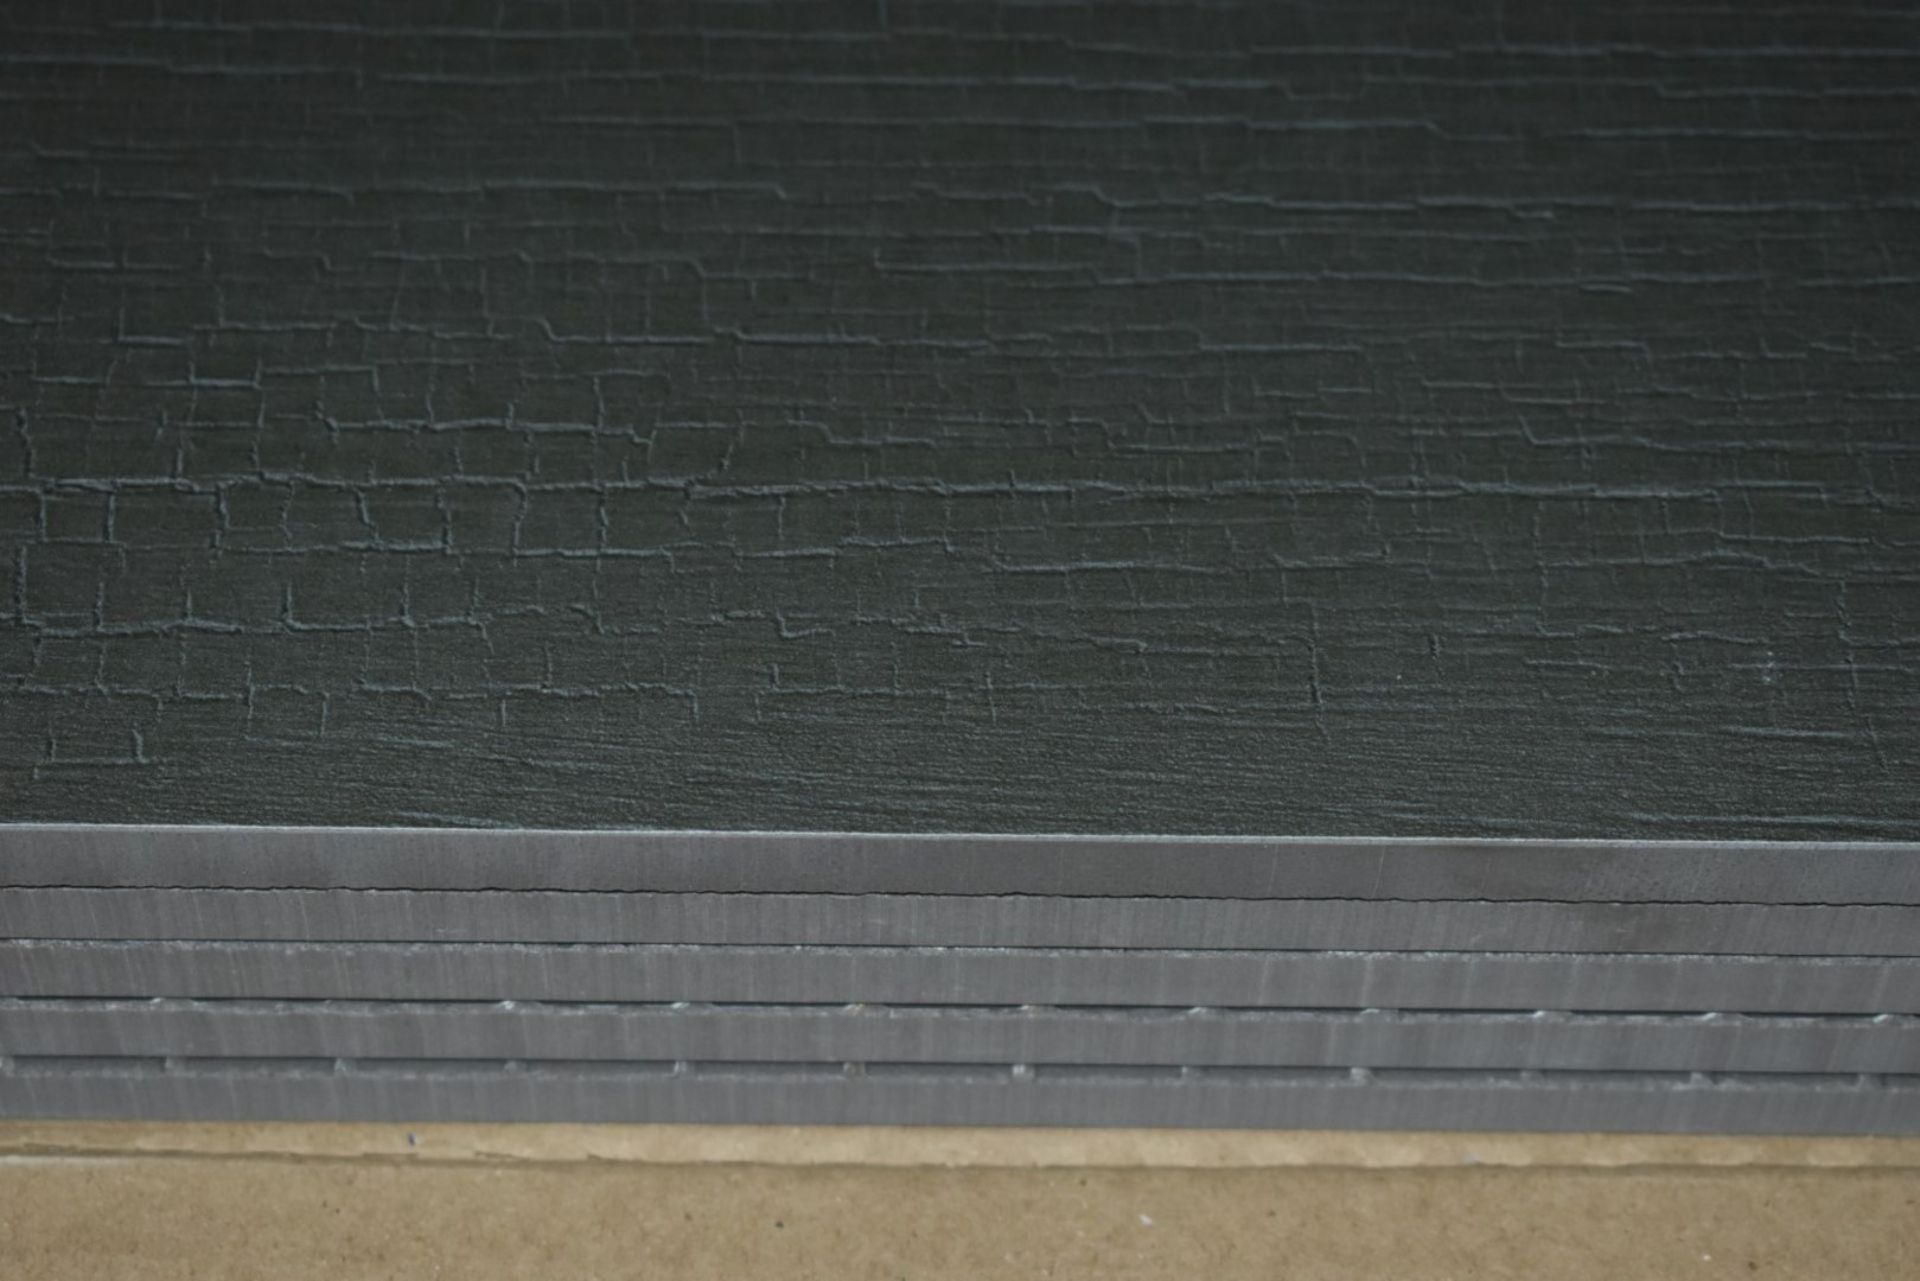 7 x Boxes of RAK Porcelain Floor or Wall Tiles - M Project Wood Design in Dark Grey - 19.5 x 120 cm - Image 4 of 11